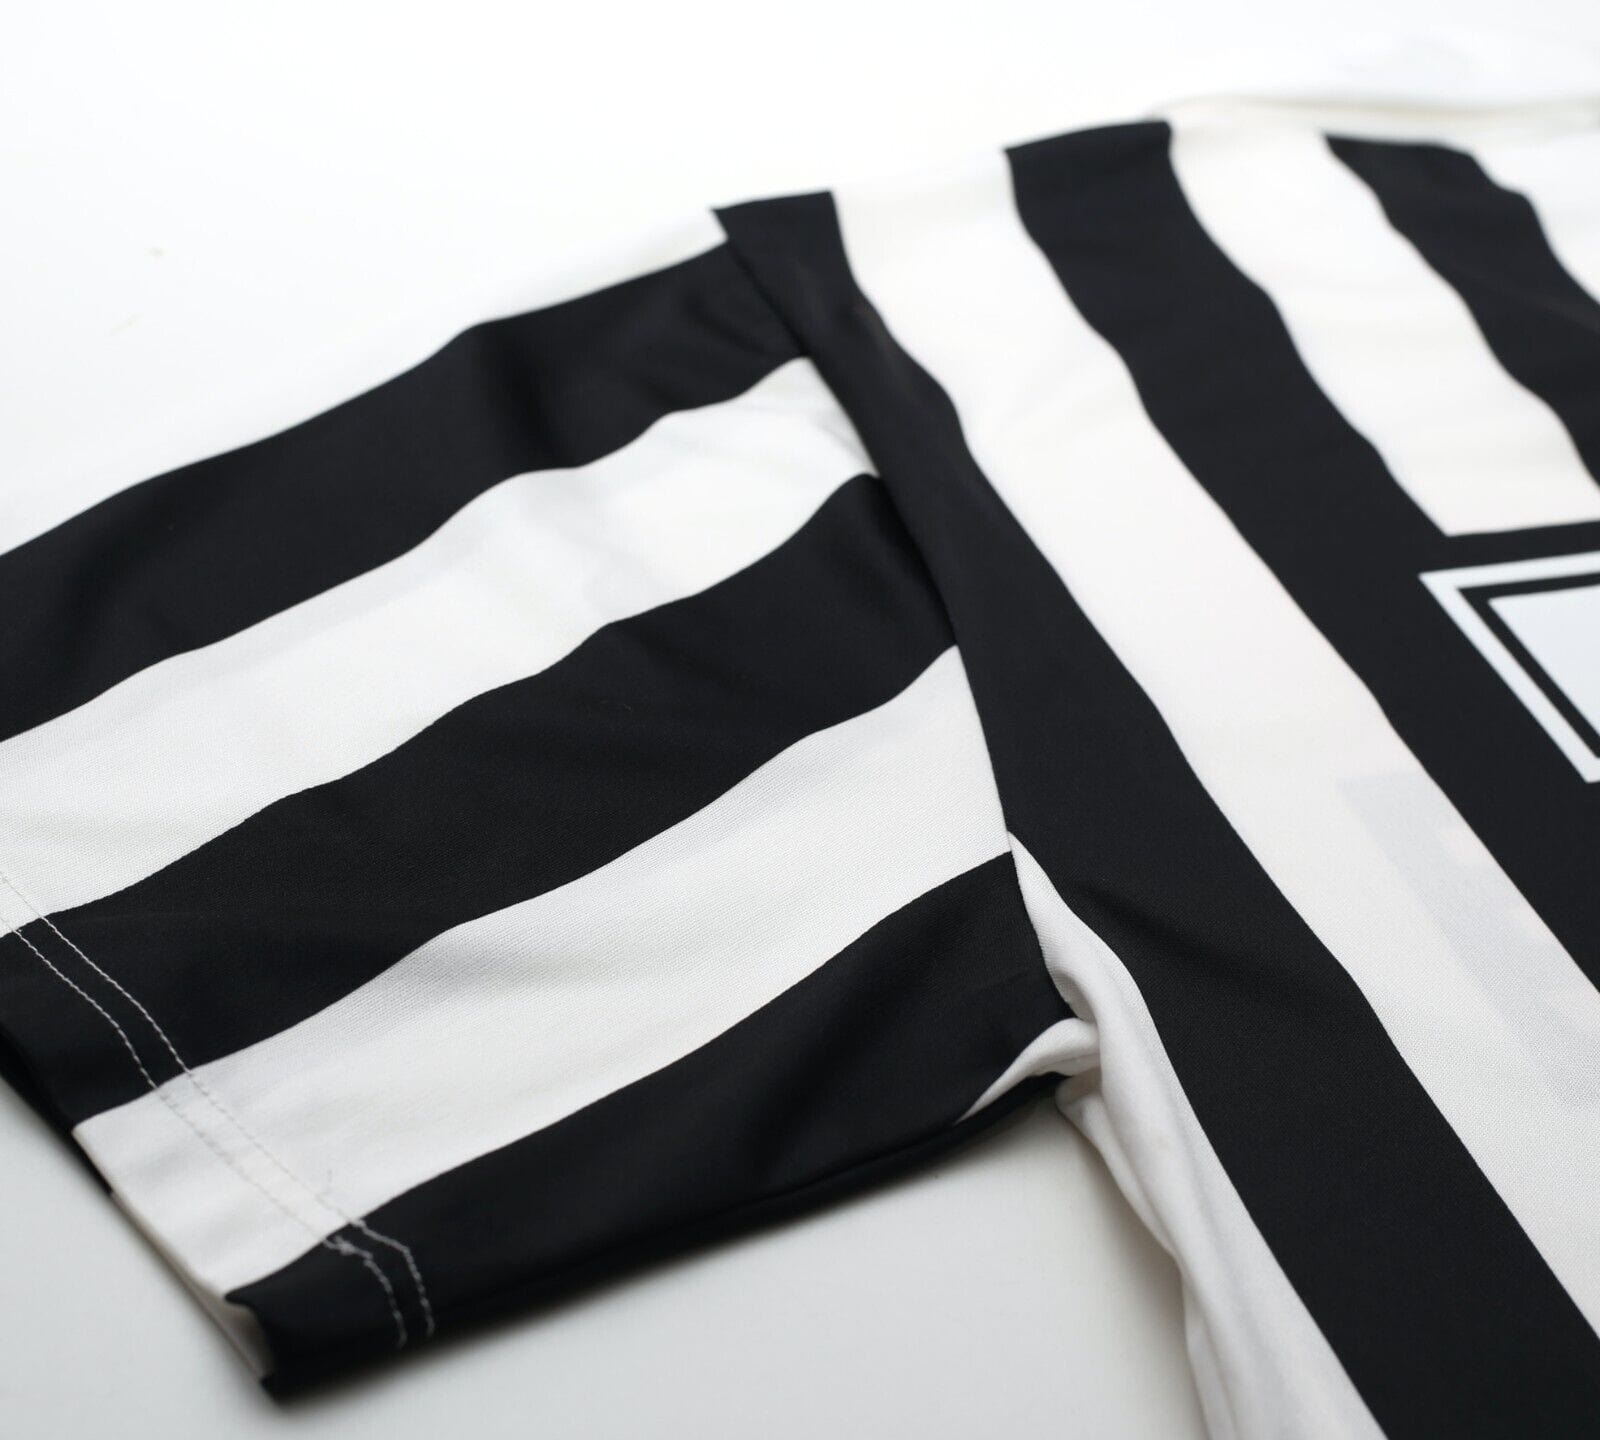 1990/91 BAGGIO #10 Juventus Vintage Kappa Home Football Shirt Jersey (M/L)